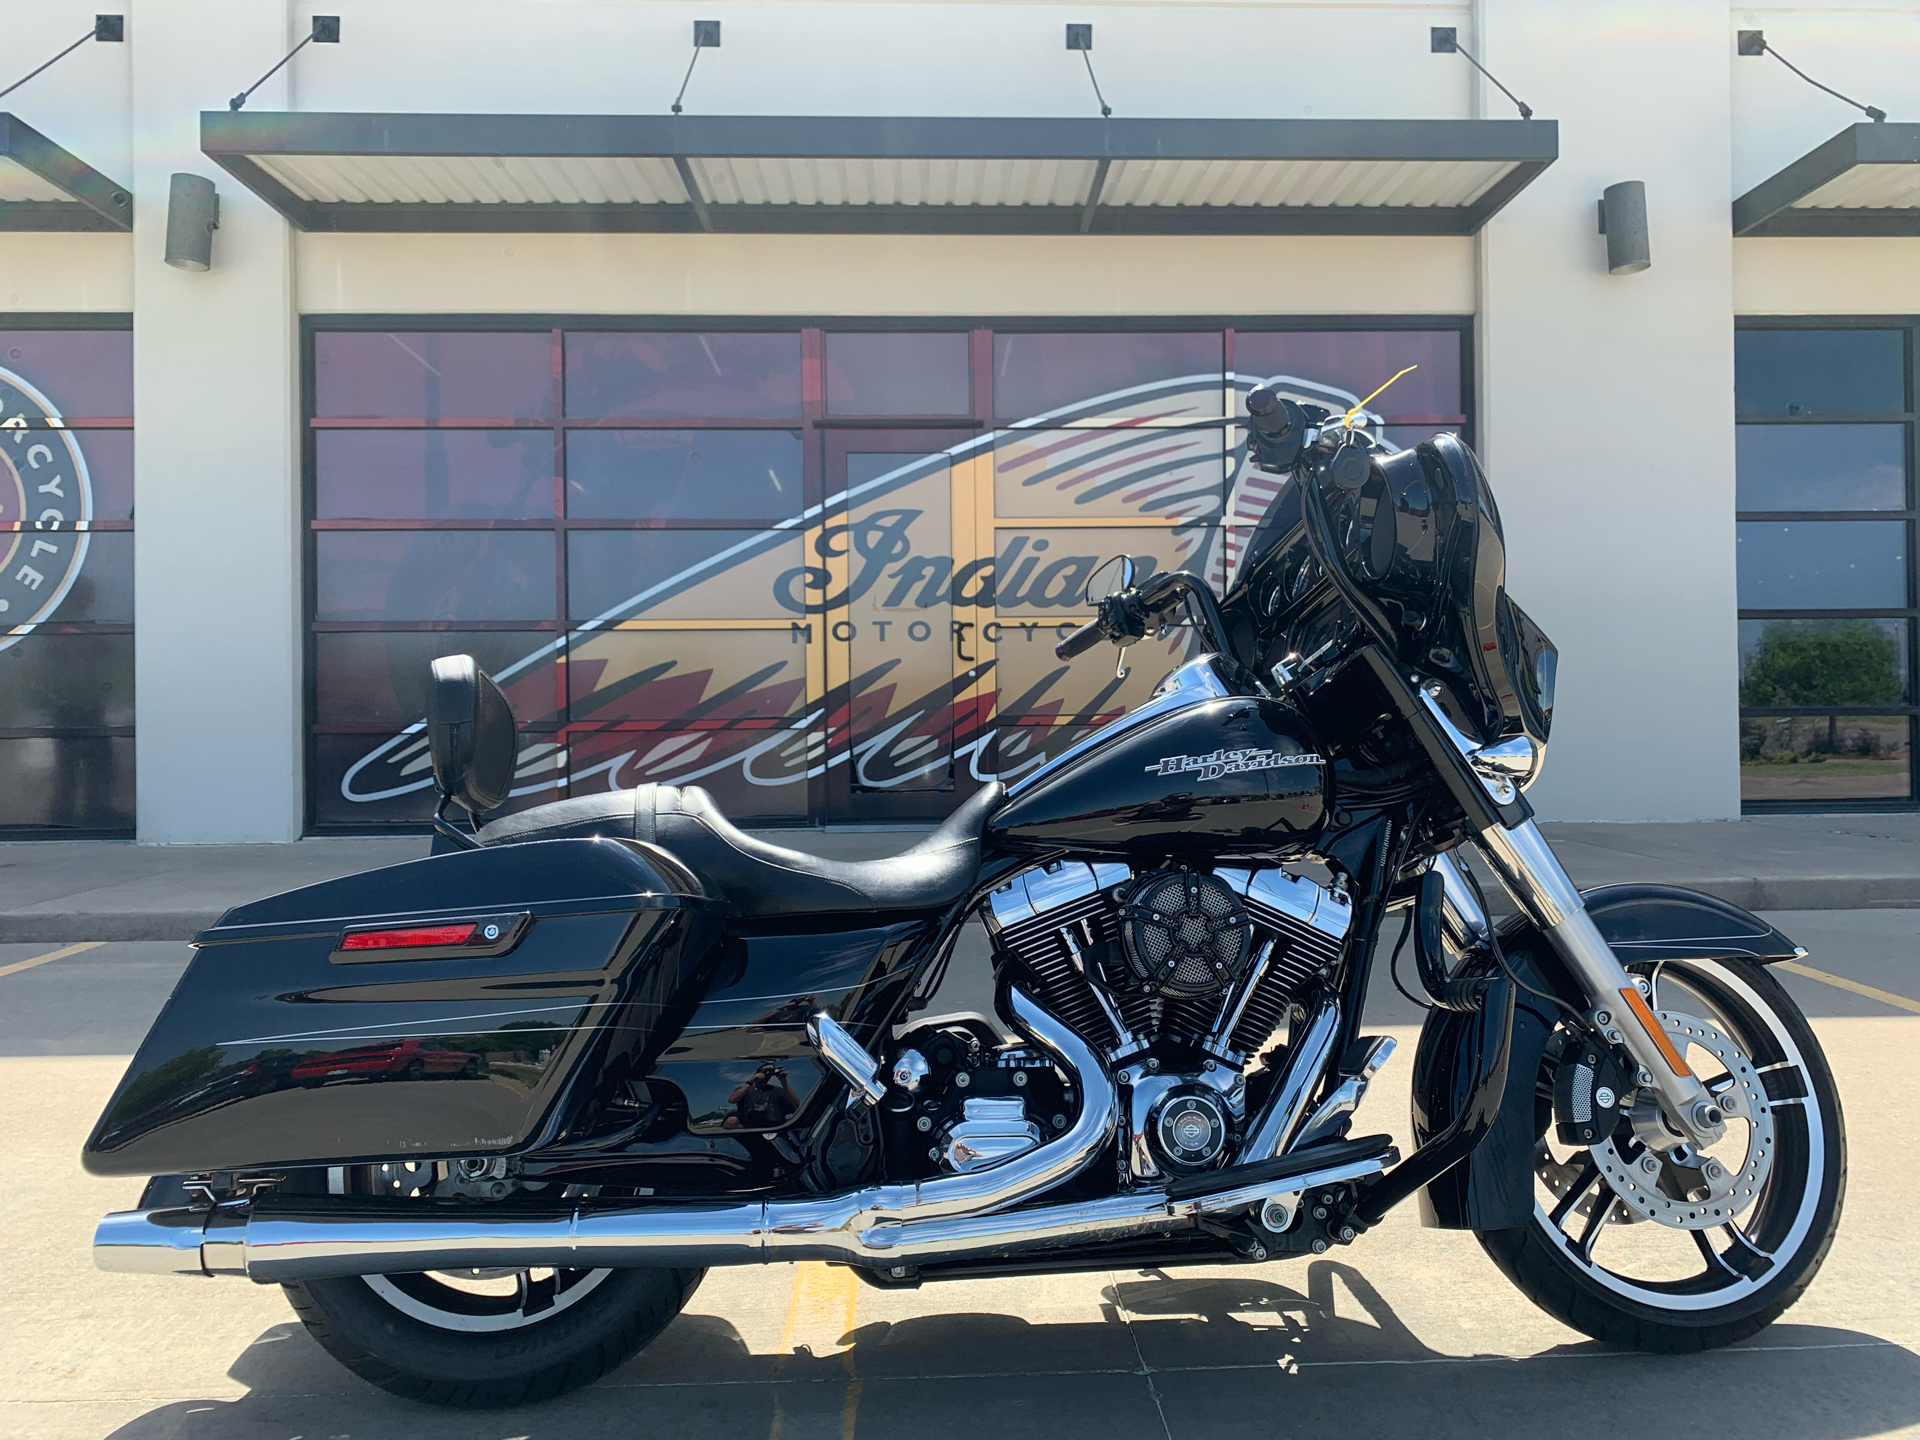 2015 Harley-Davidson Street Glide® Special in Norman, Oklahoma - Photo 1